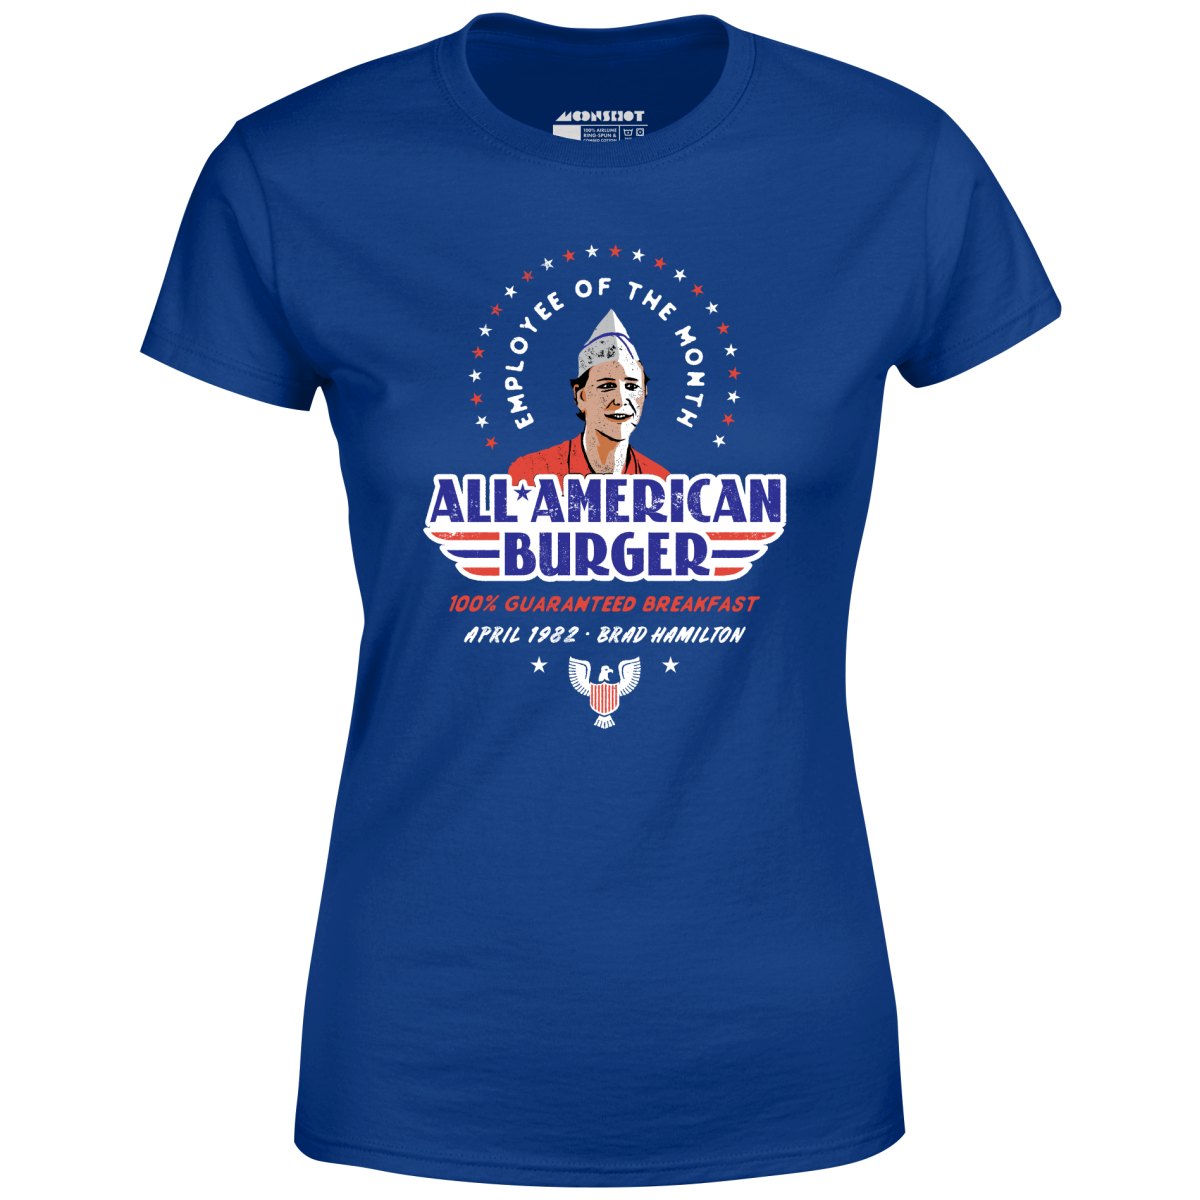 Brad Hamilton - All American Burger - Women's T-Shirt